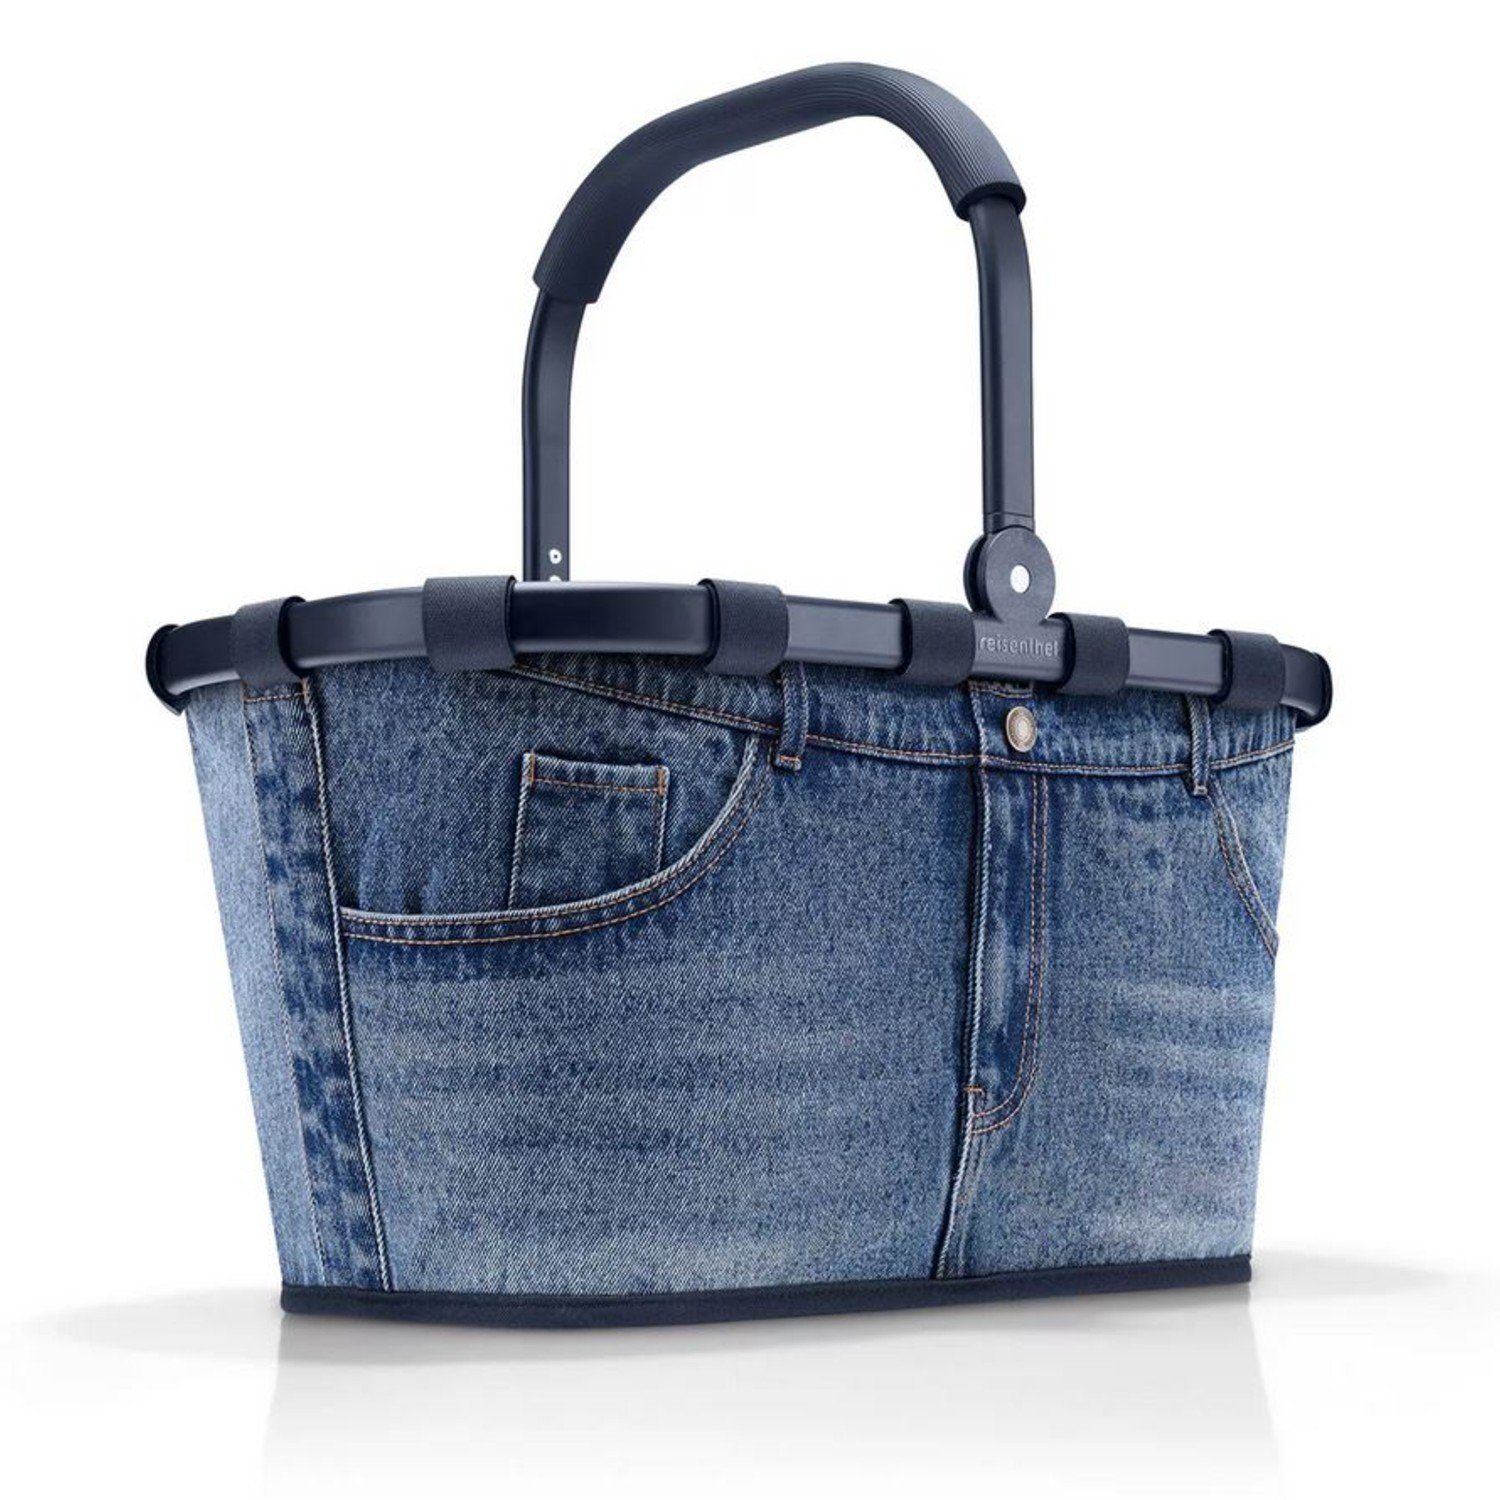 blue jeans REISENTHEL® Carrybag frame classic Einkaufskorb